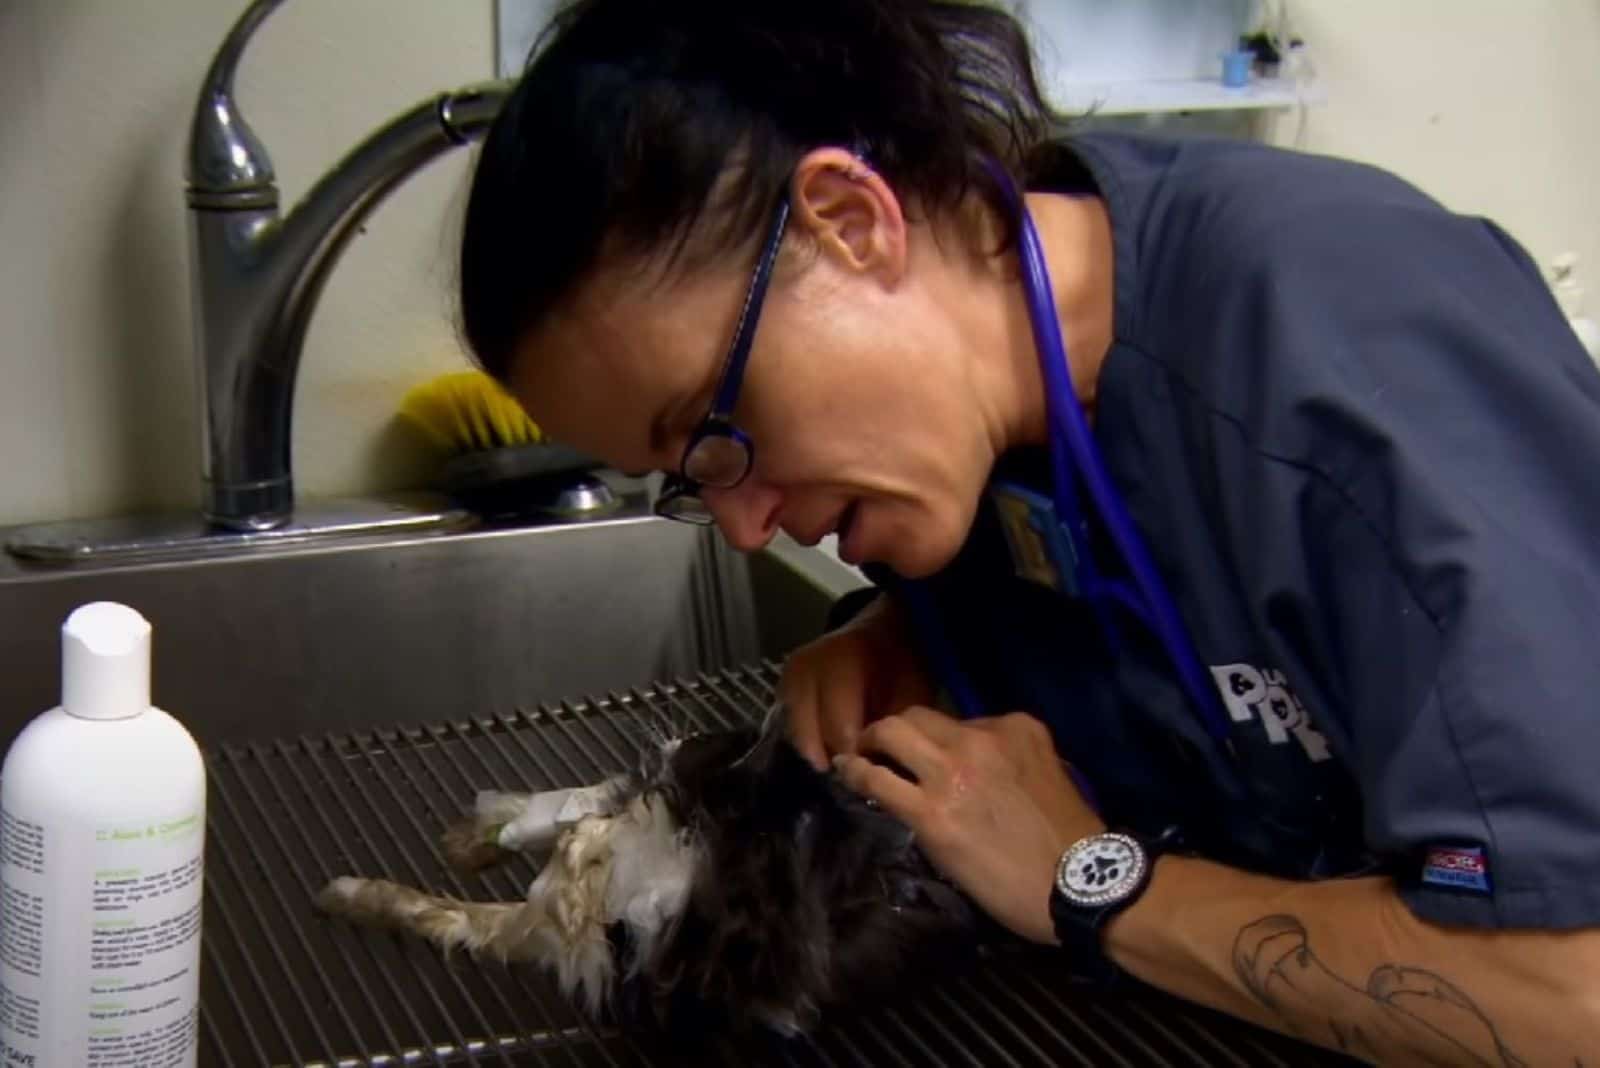 the veterinarian examines the injured kitten